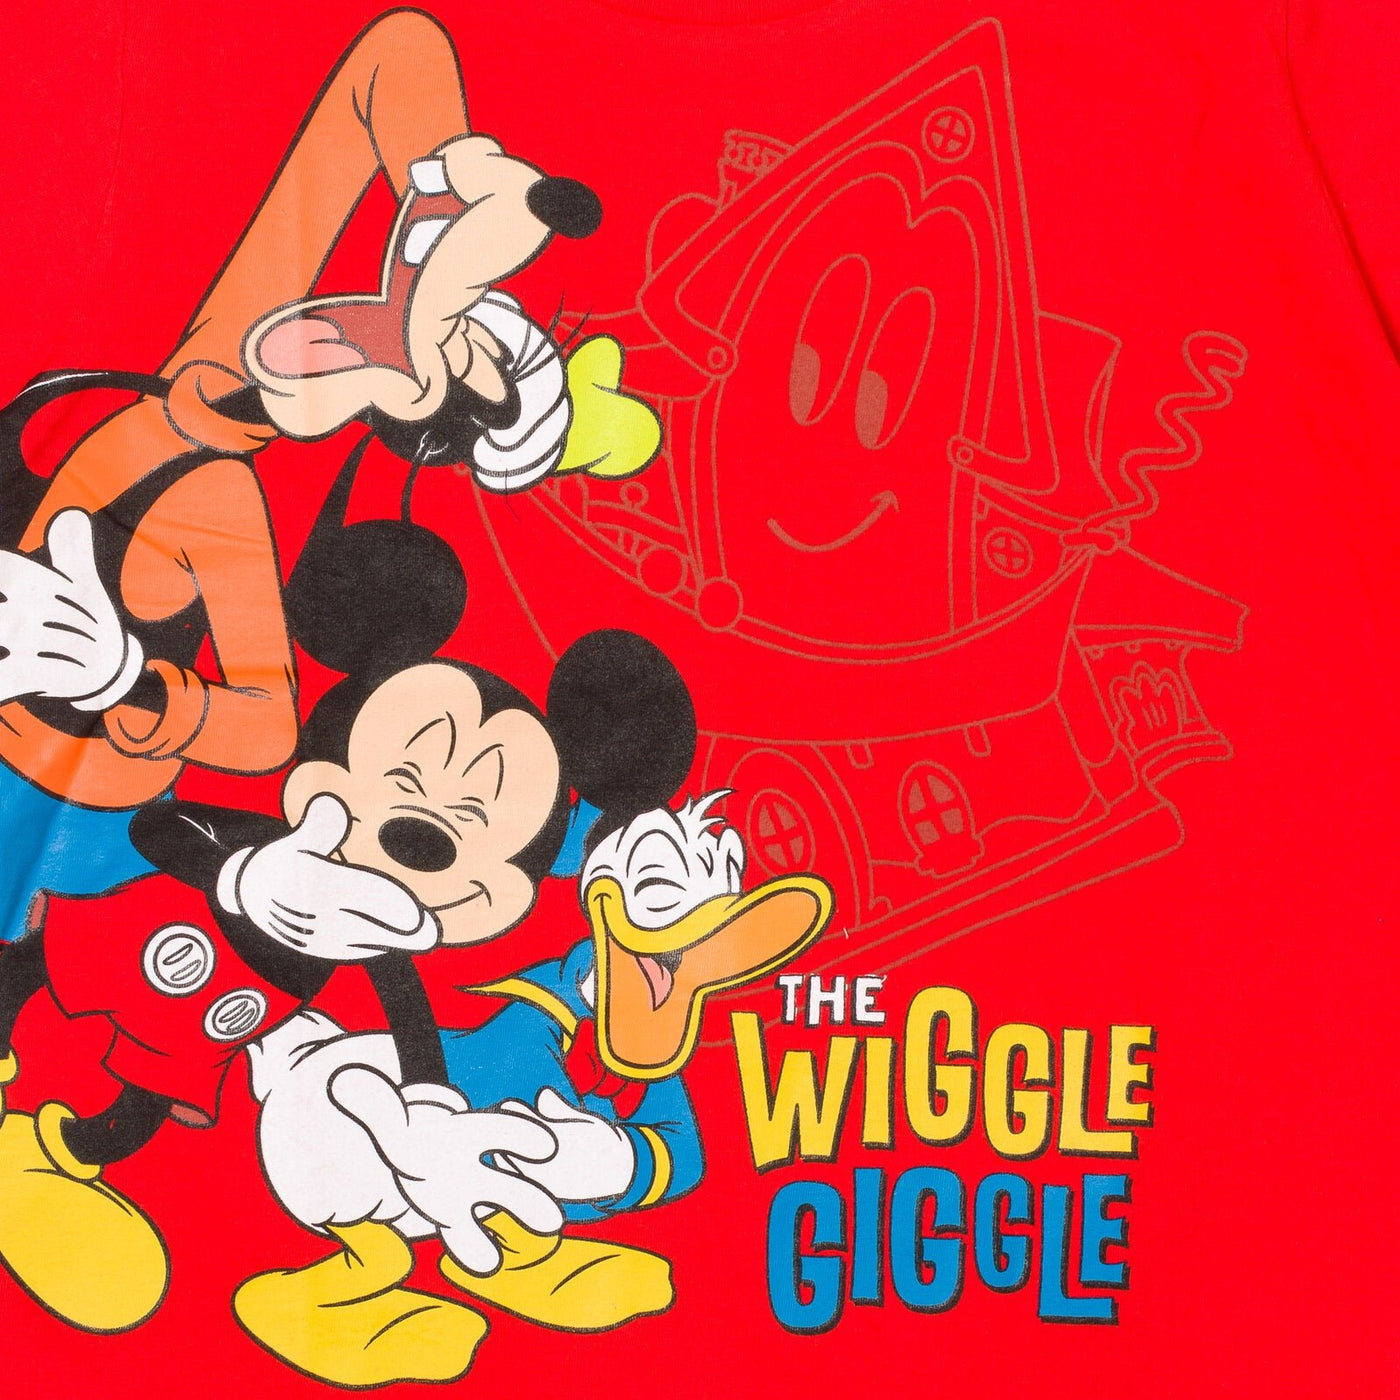 Disney 3 Pack Pullover T-Shirts - imagikids